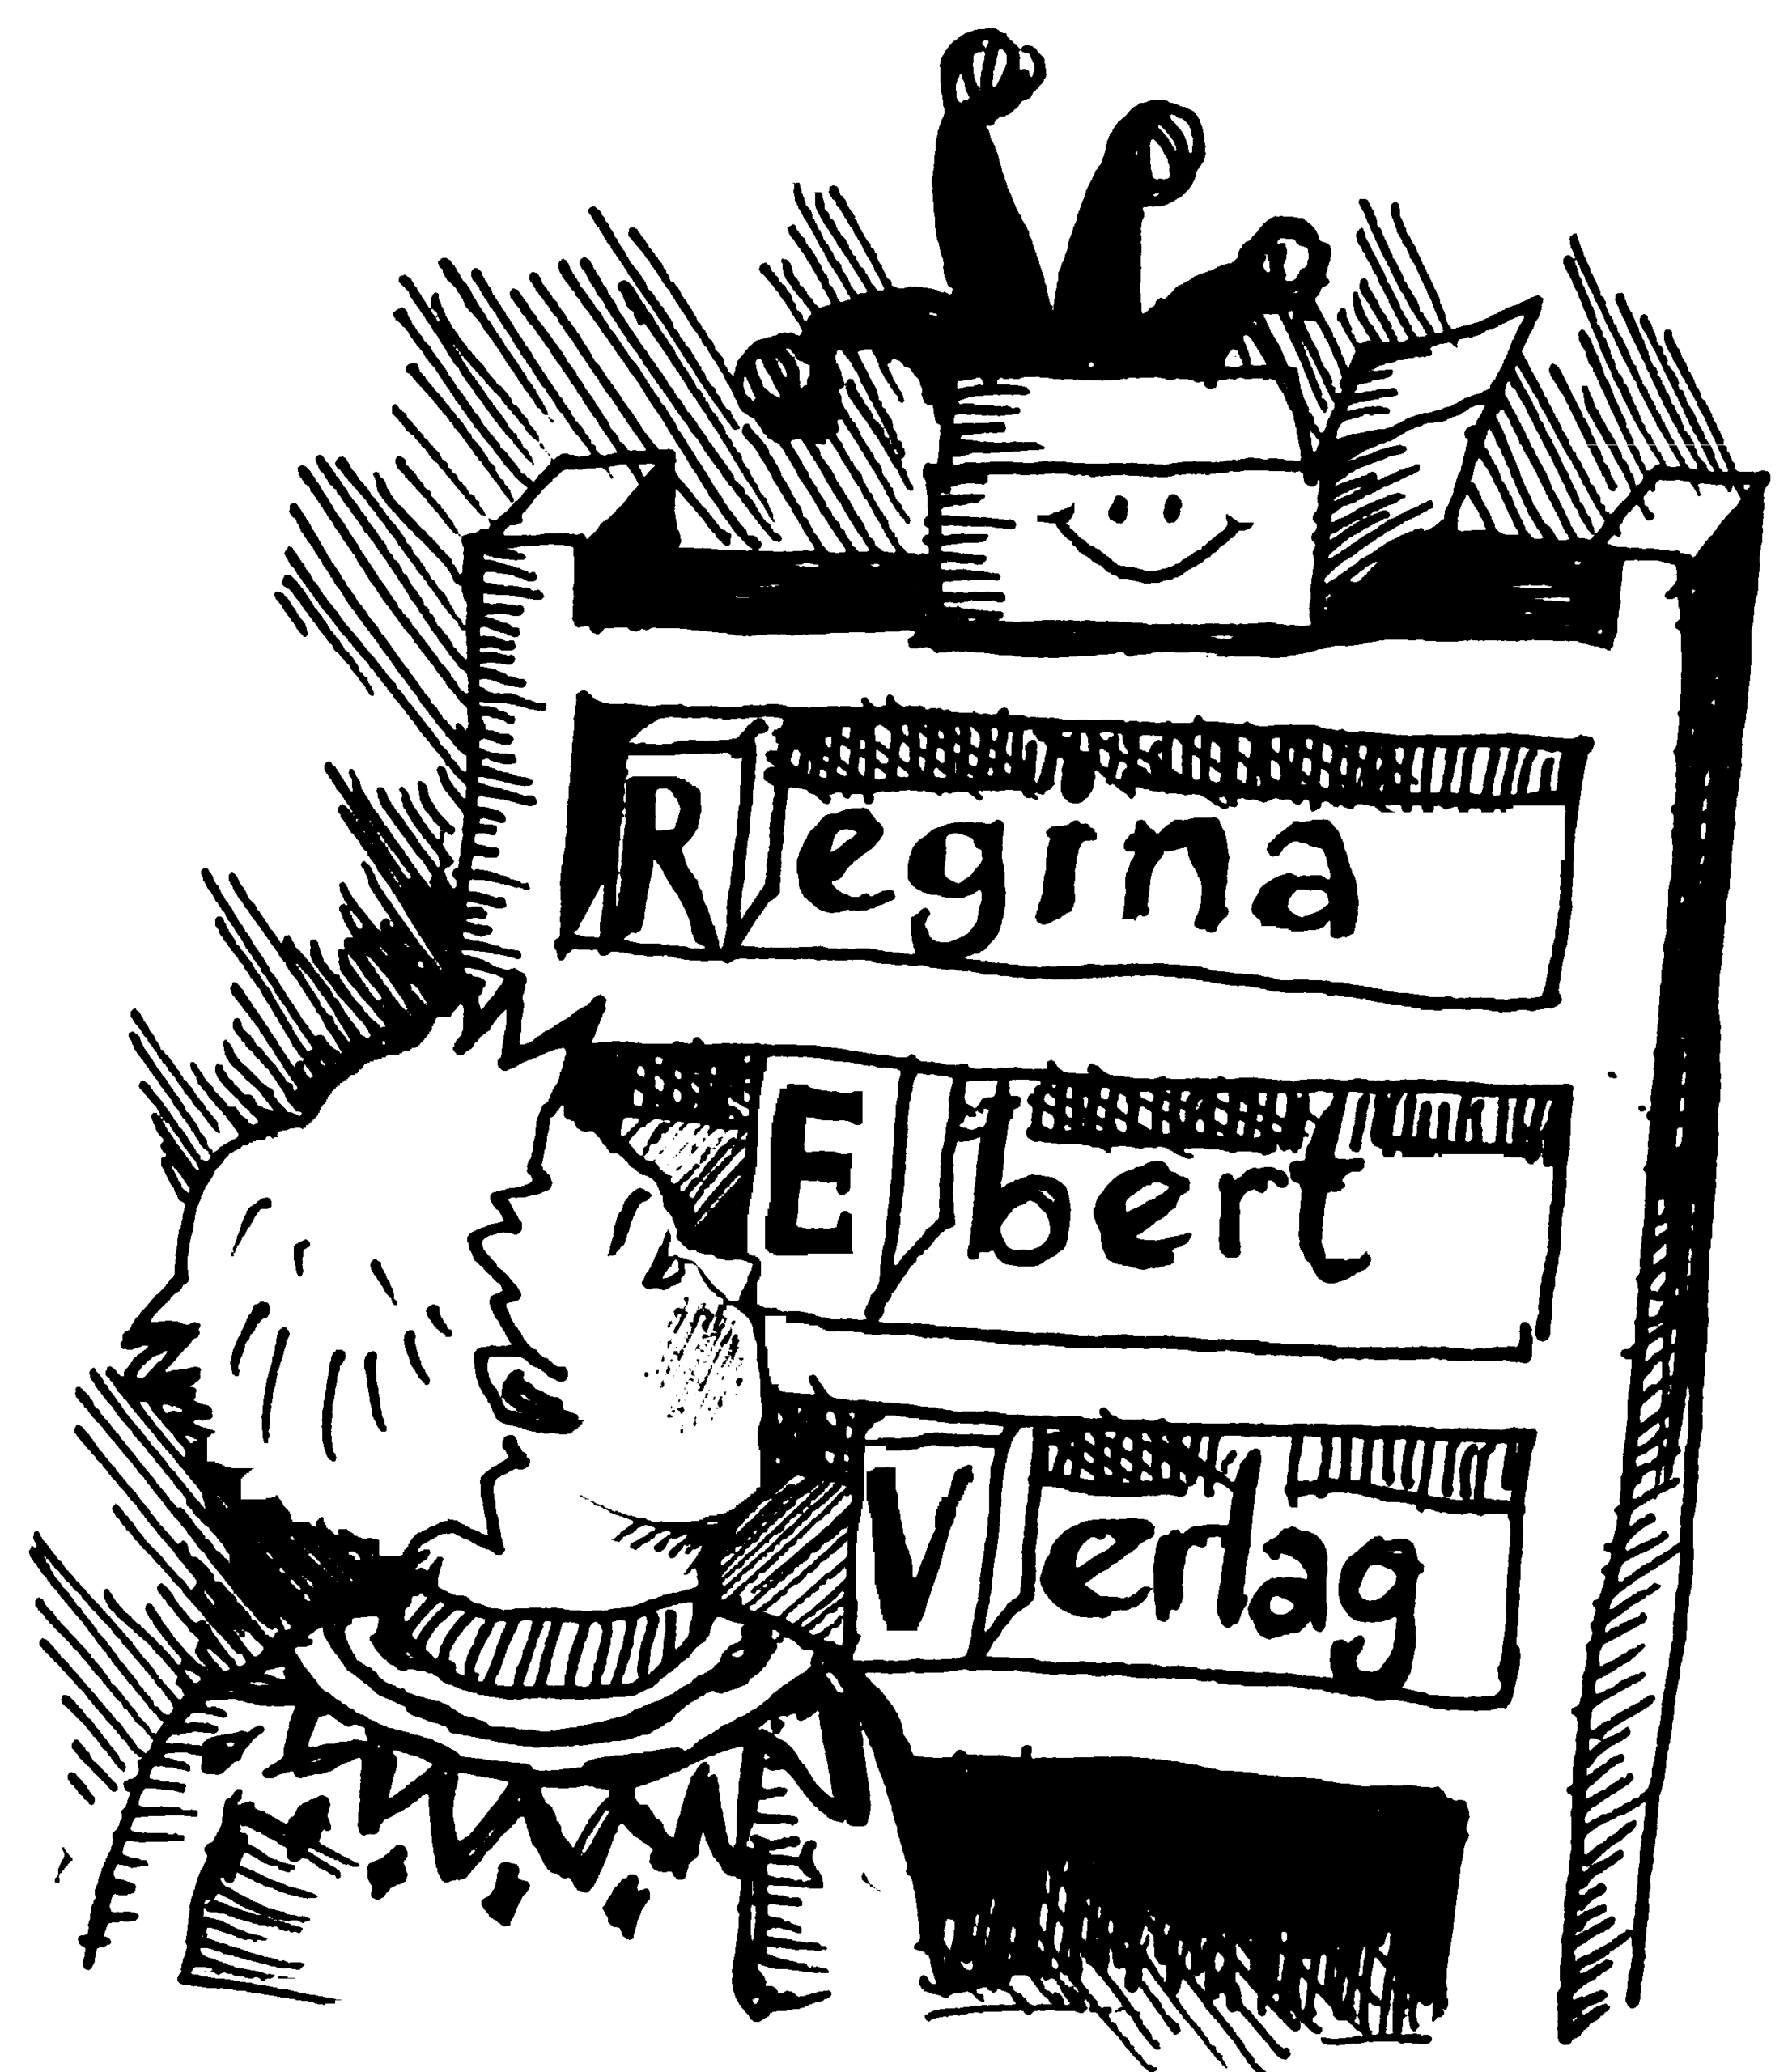 Regina Ebert Verlag